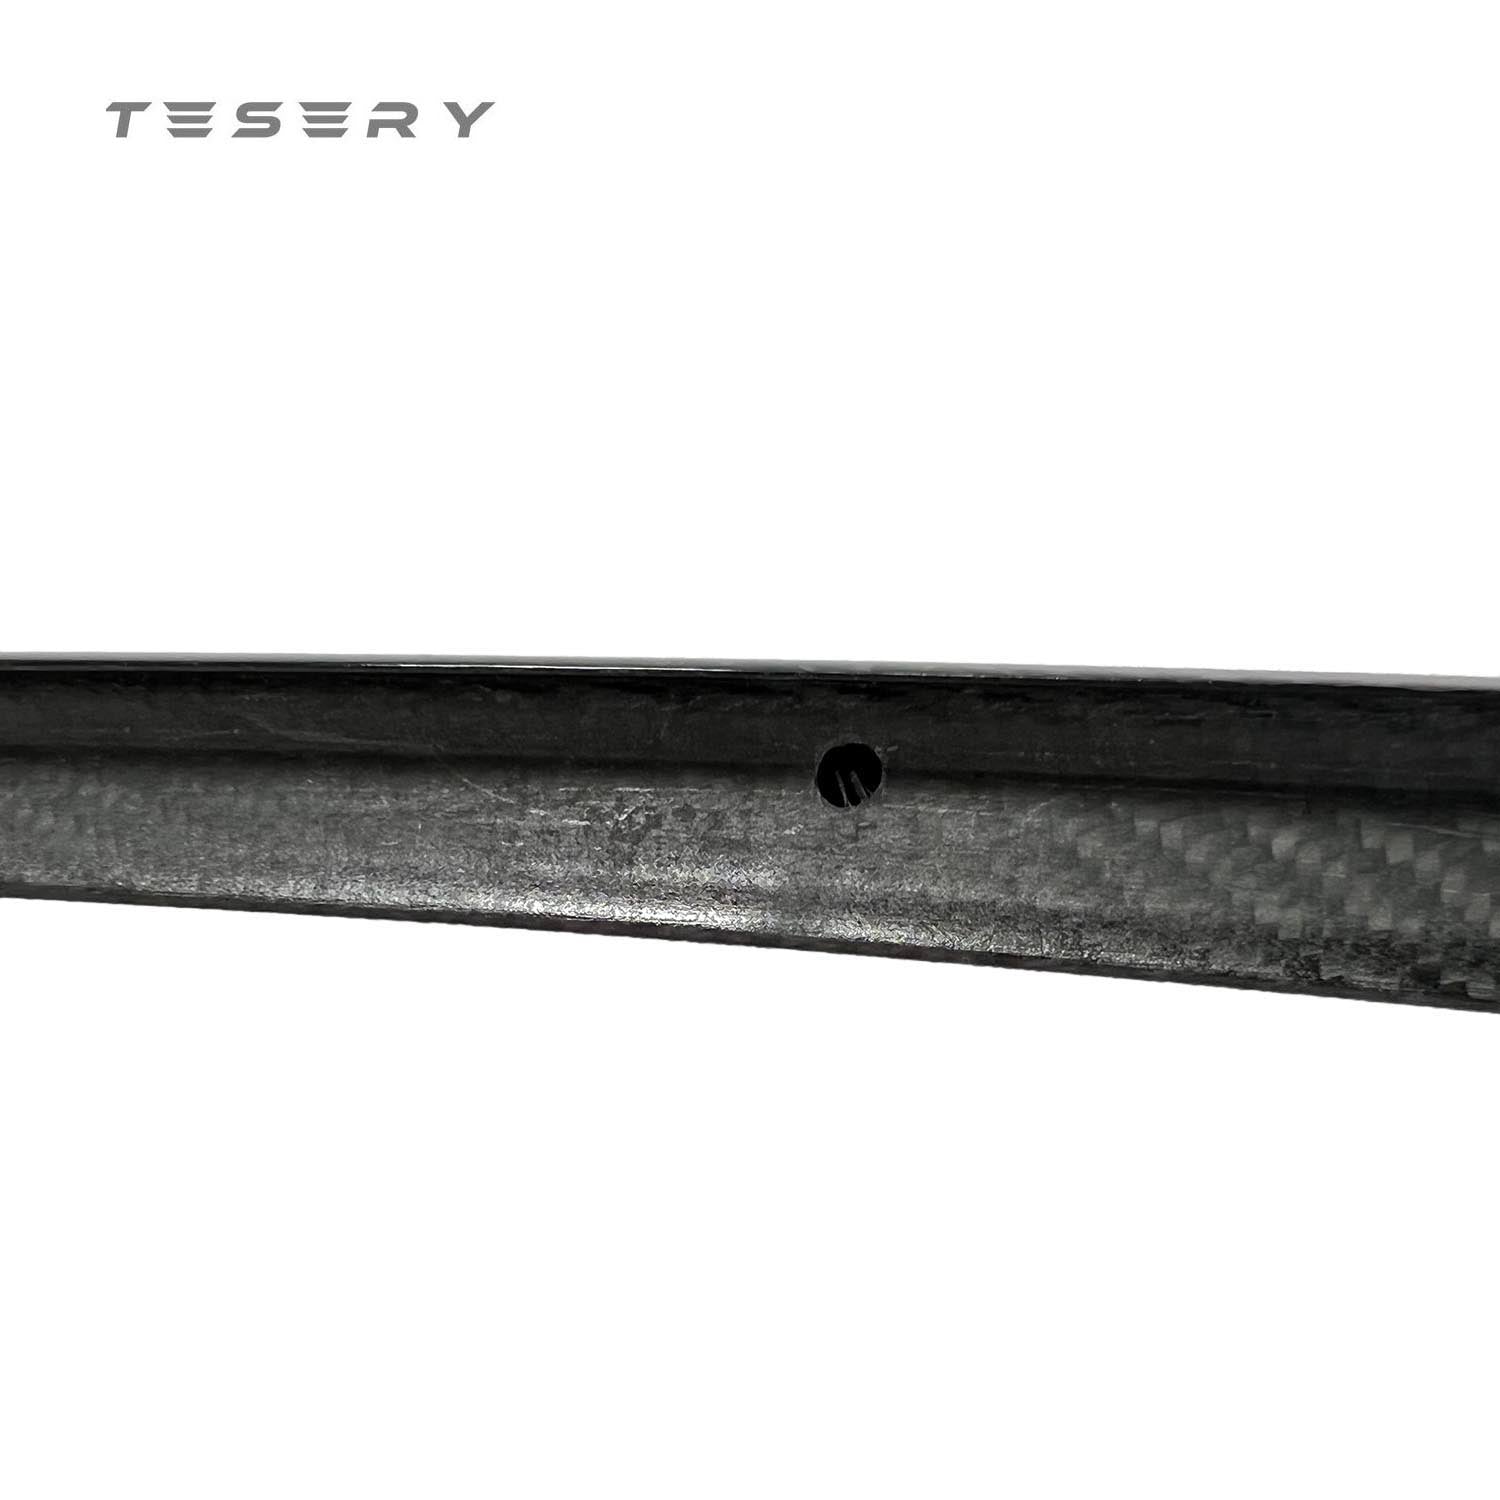 Tesery Model 3 / Y Spoiler DC-Style - Carbon Fiber Exterior Mods - Tesery Official Store